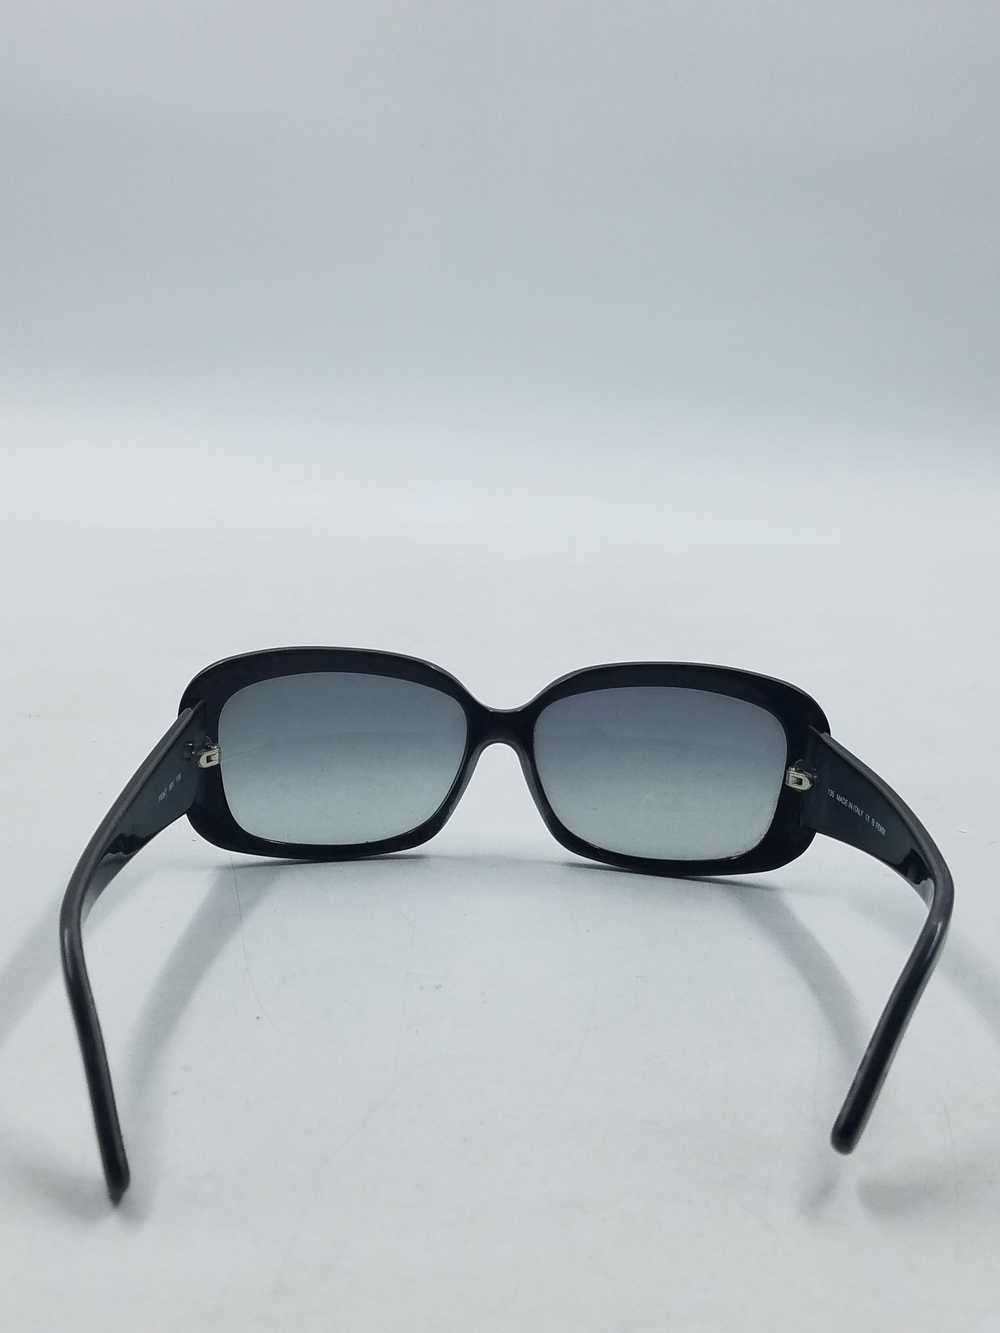 Fendi Black Tinted Square Sunglasses - image 3